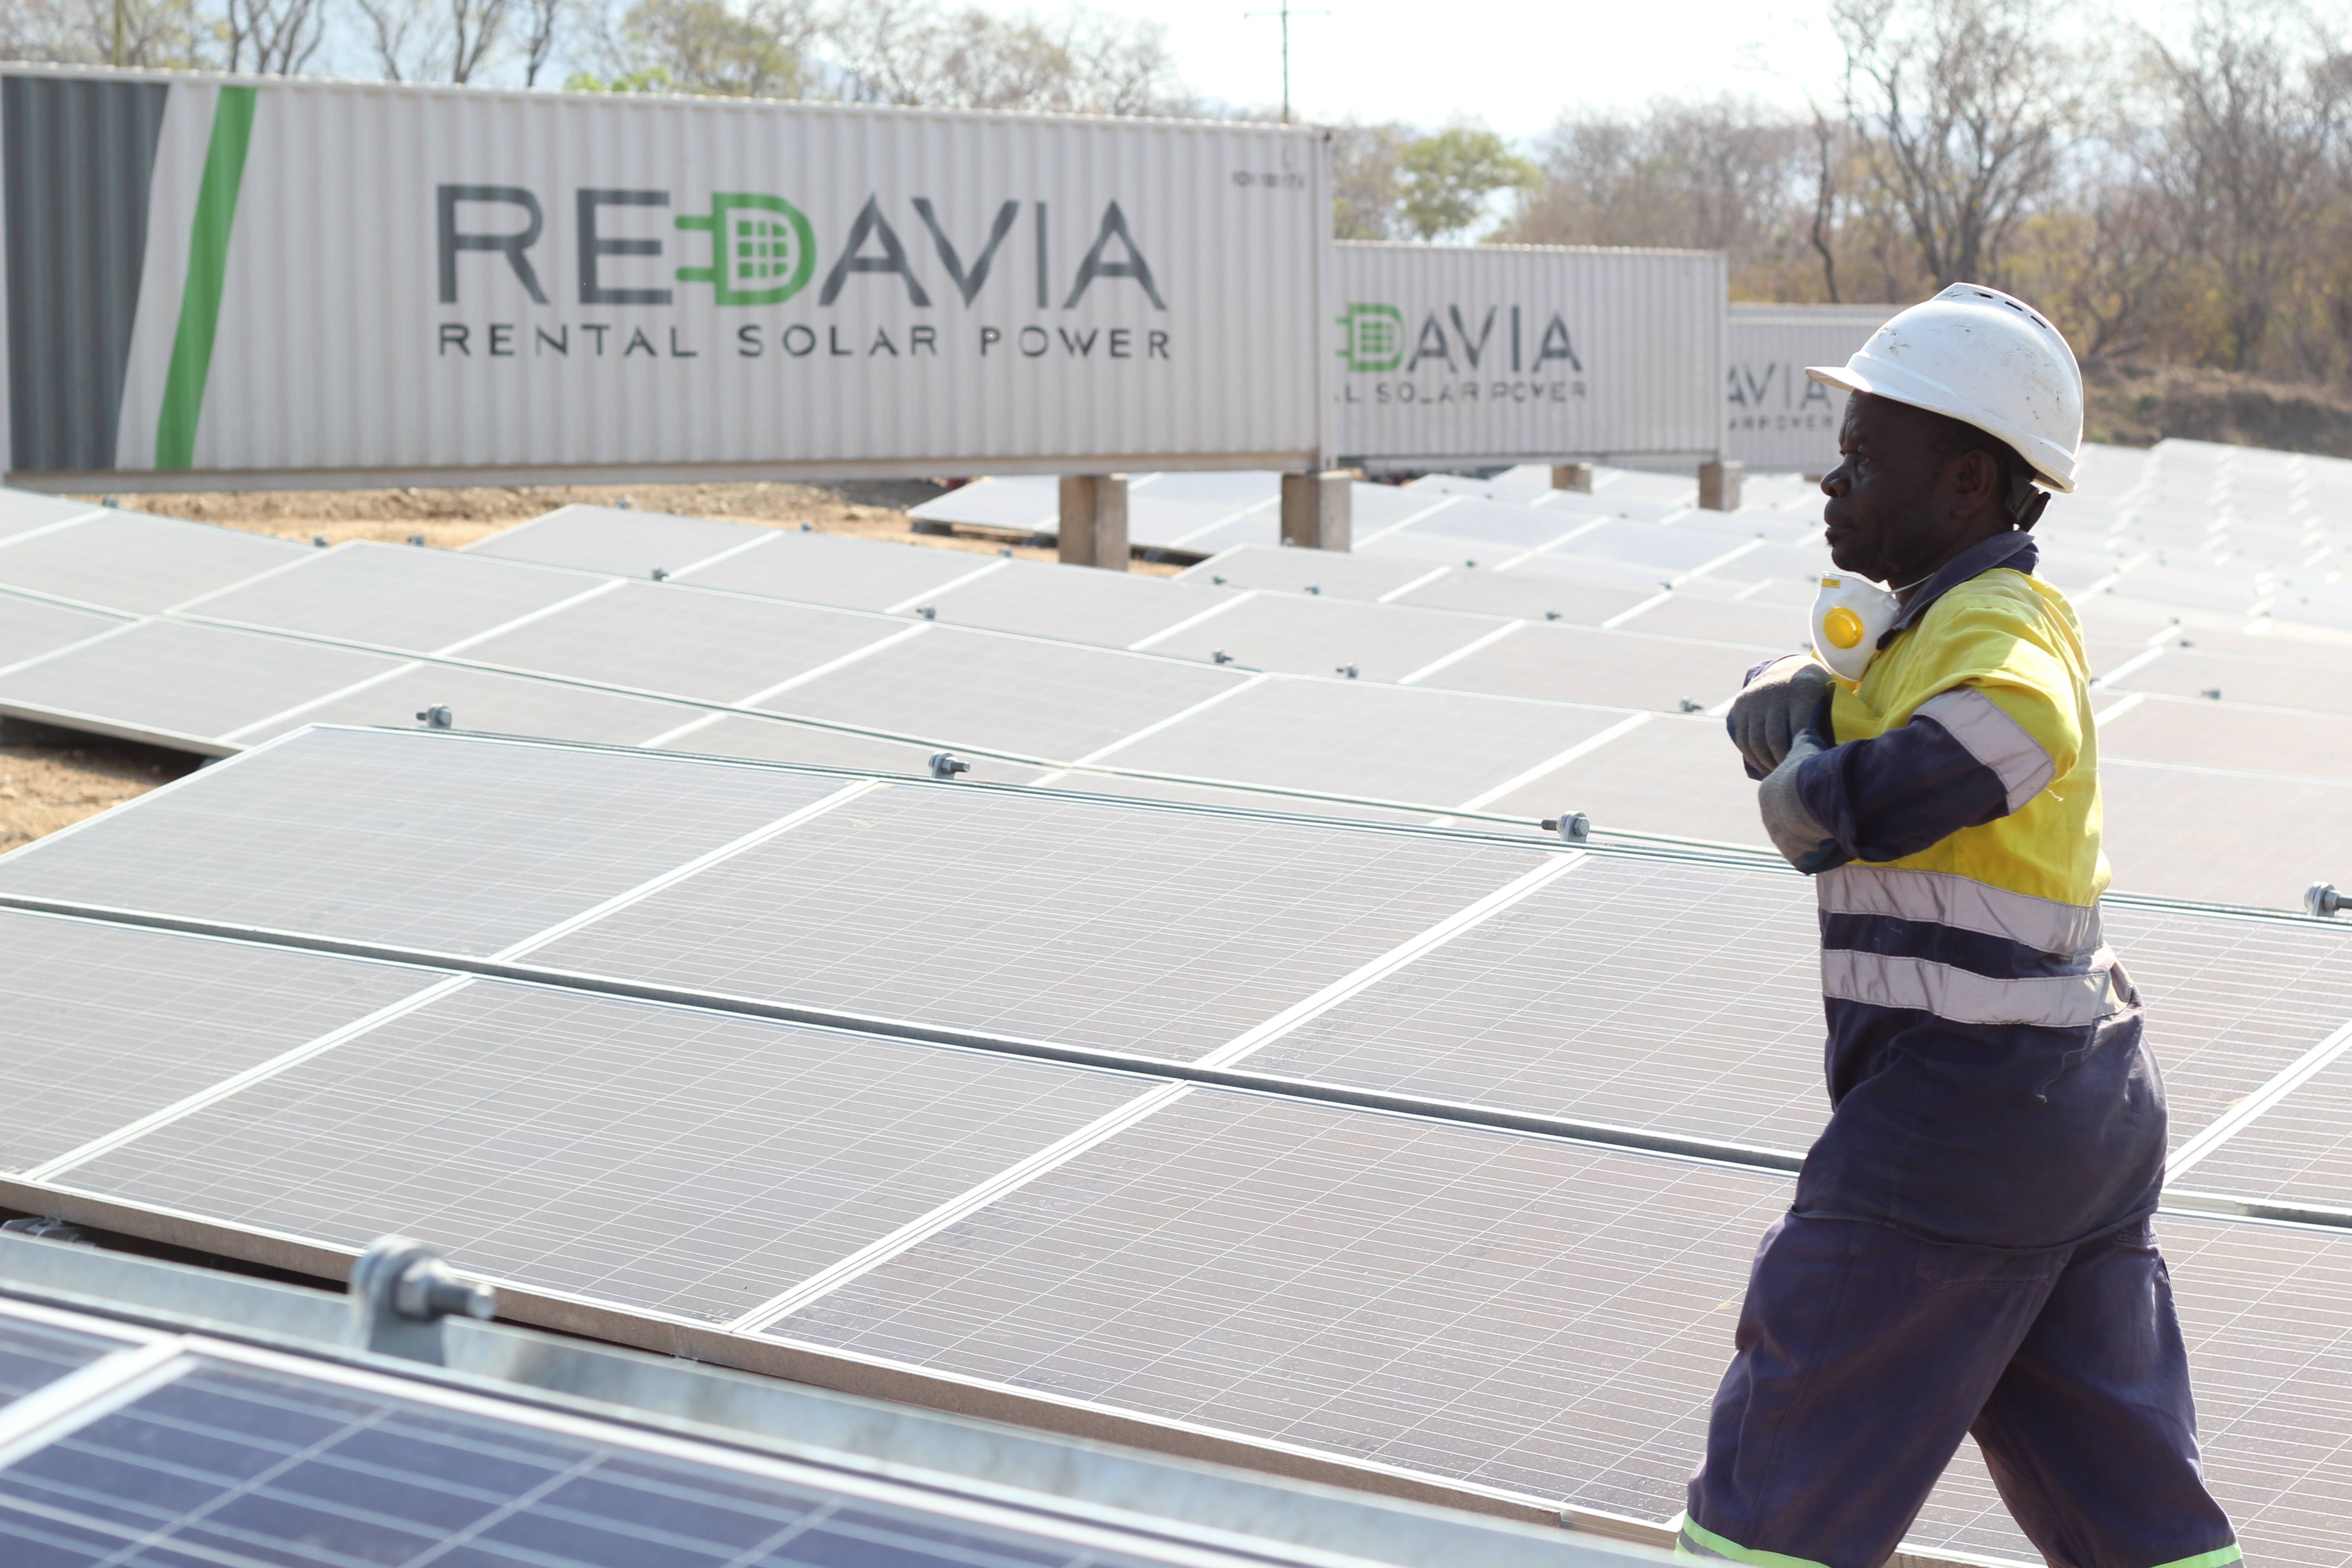 Redavia solar farm with male engineer walking between panels